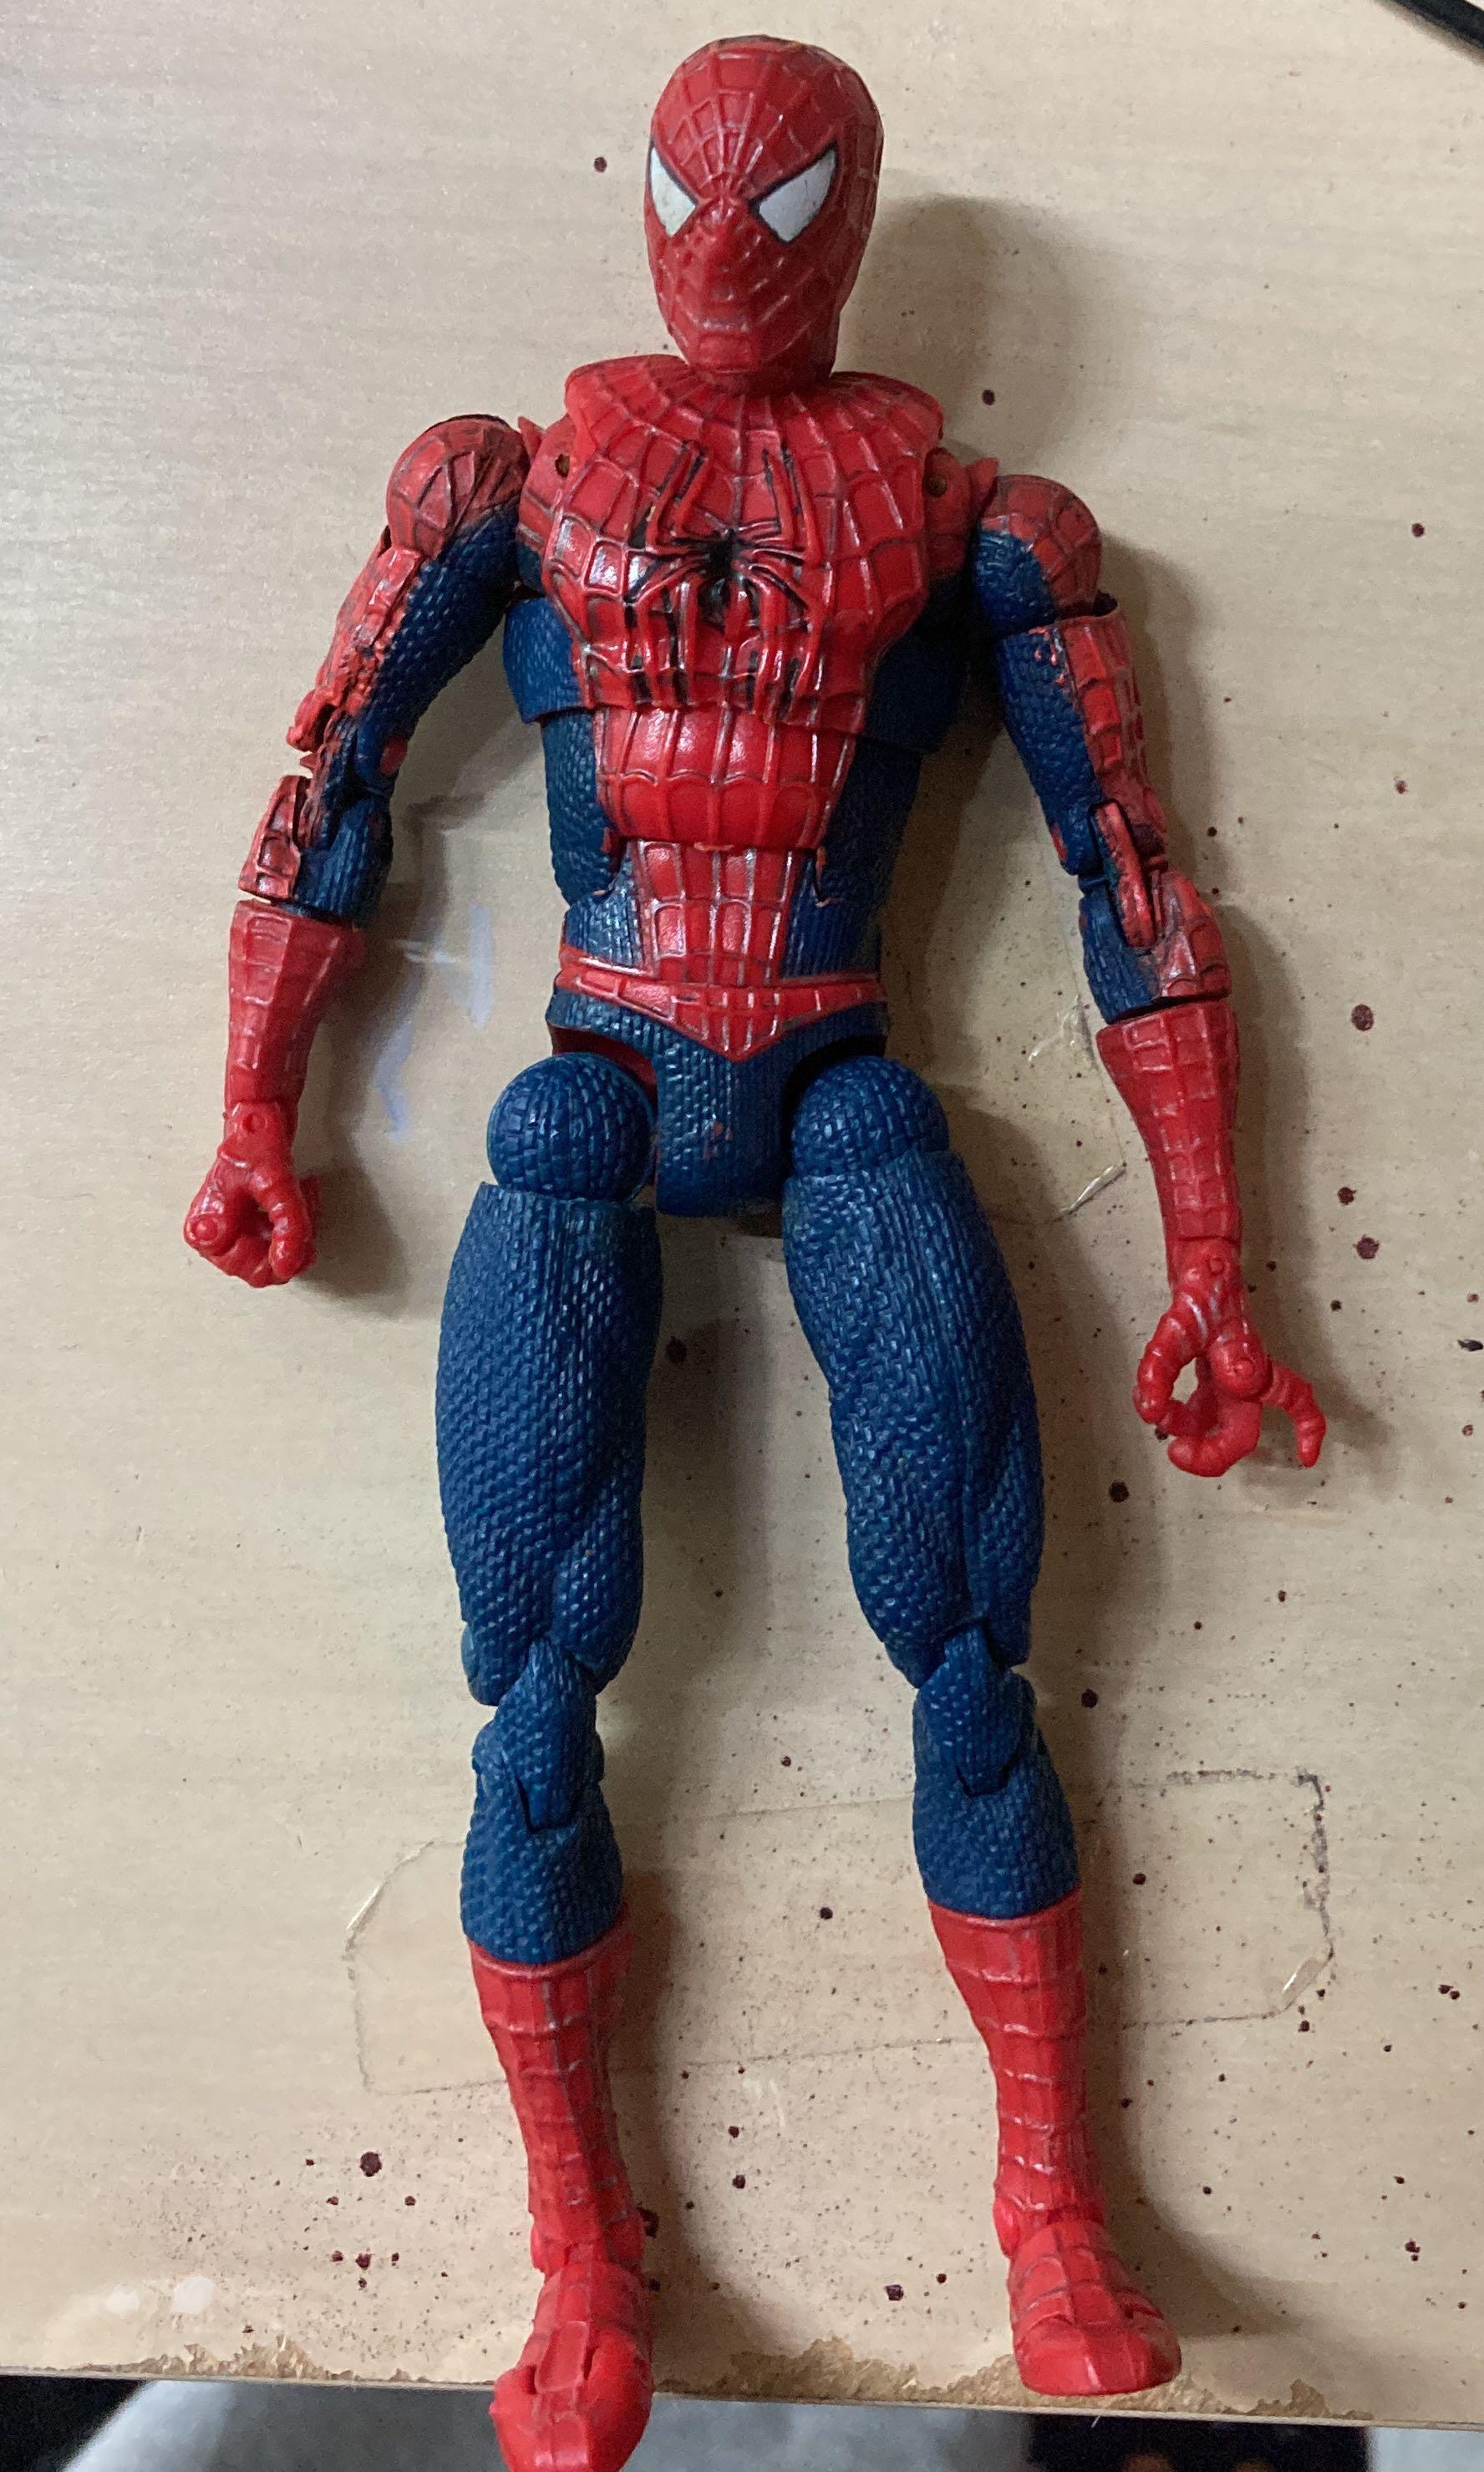 spider man action figures 2002